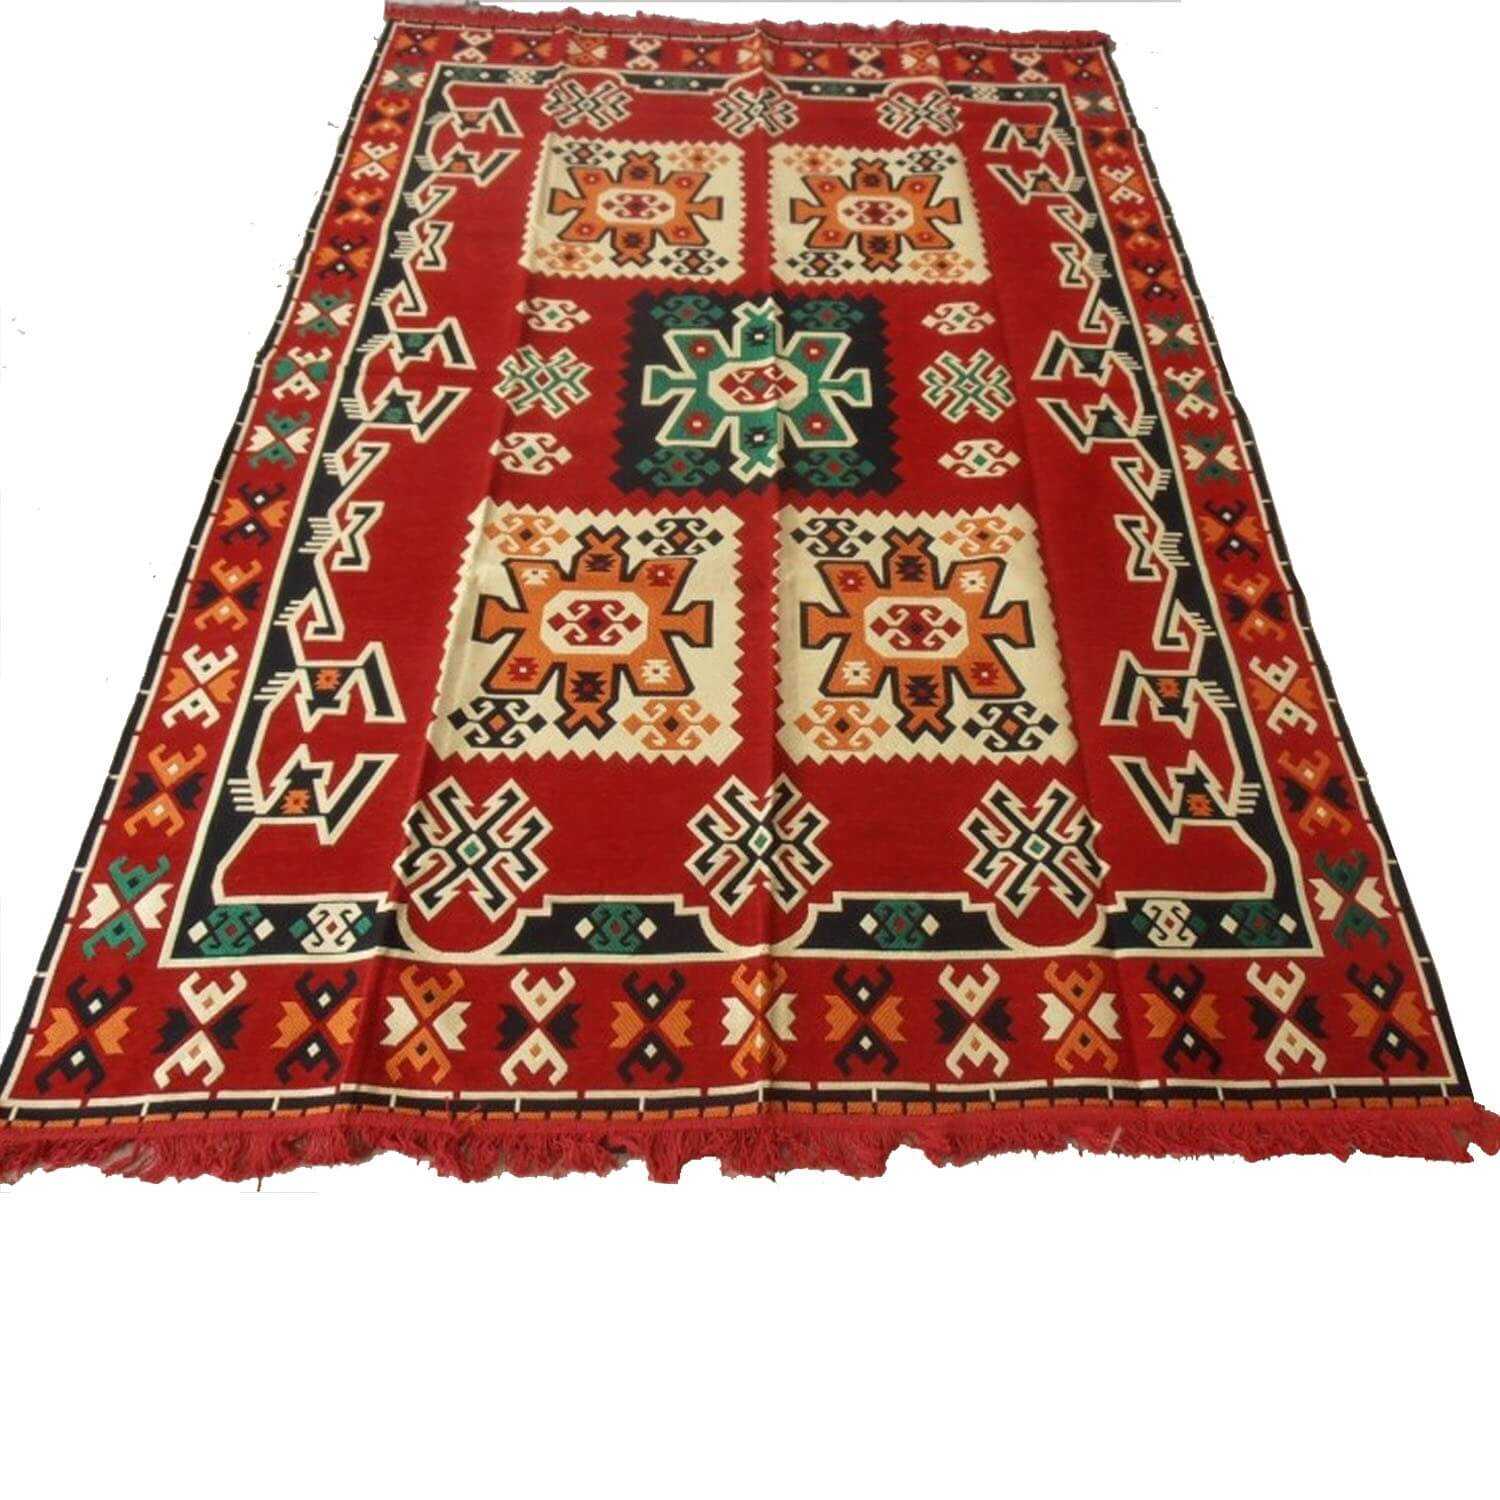 PERGAMON 300 x 200 cm oriental Turkish kilim rug